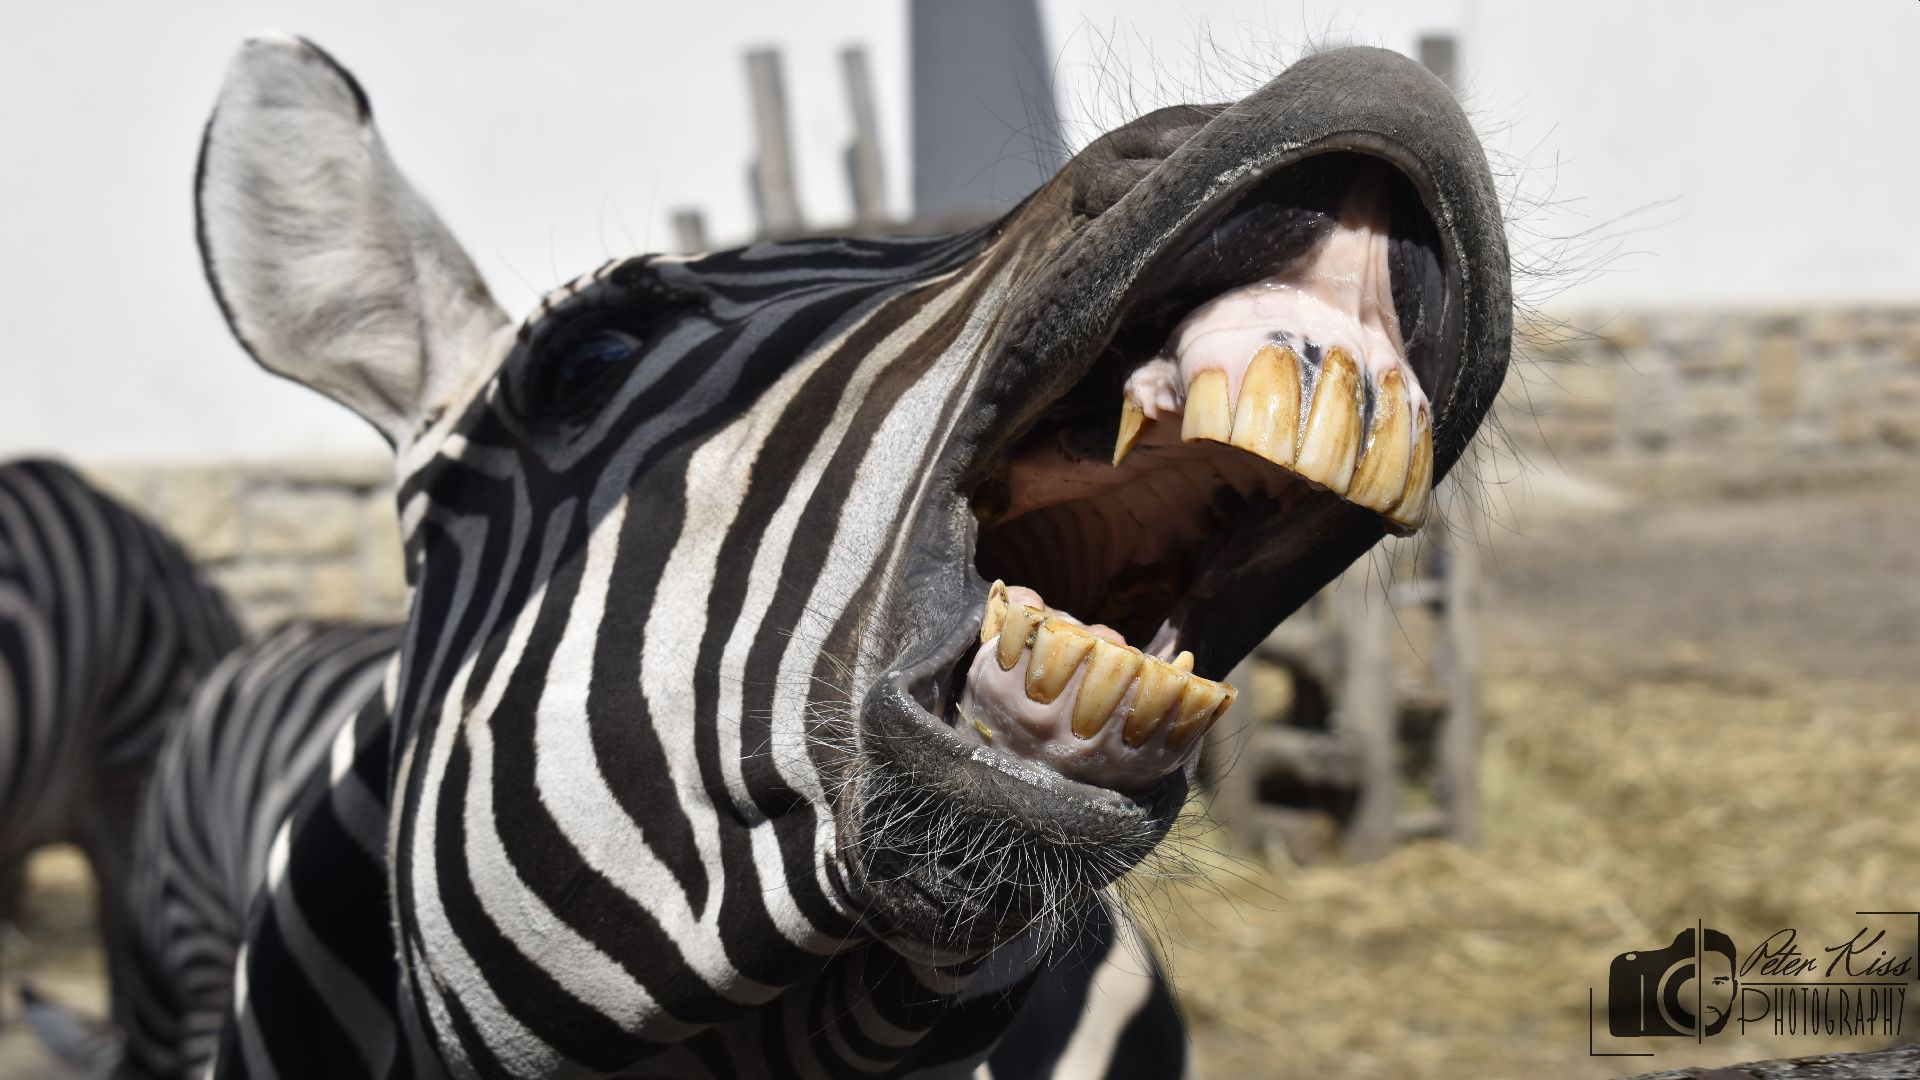 General 1920x1080 zebras Zoo teeth humor photography animals watermarked closeup